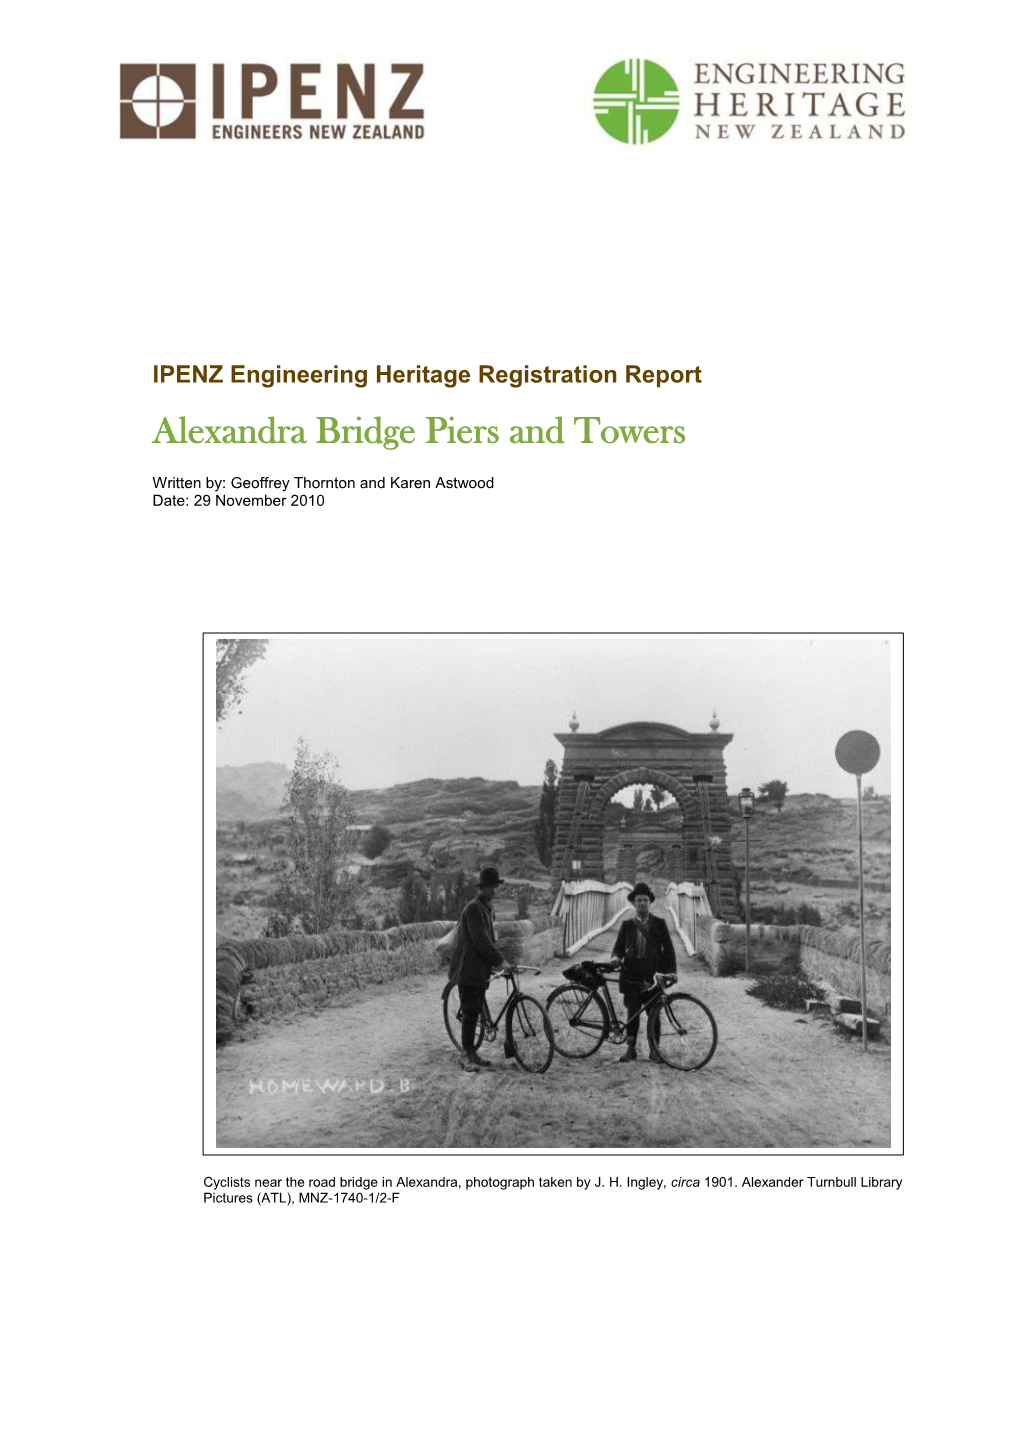 Alexandra Bridge Piers and Towers Register Report